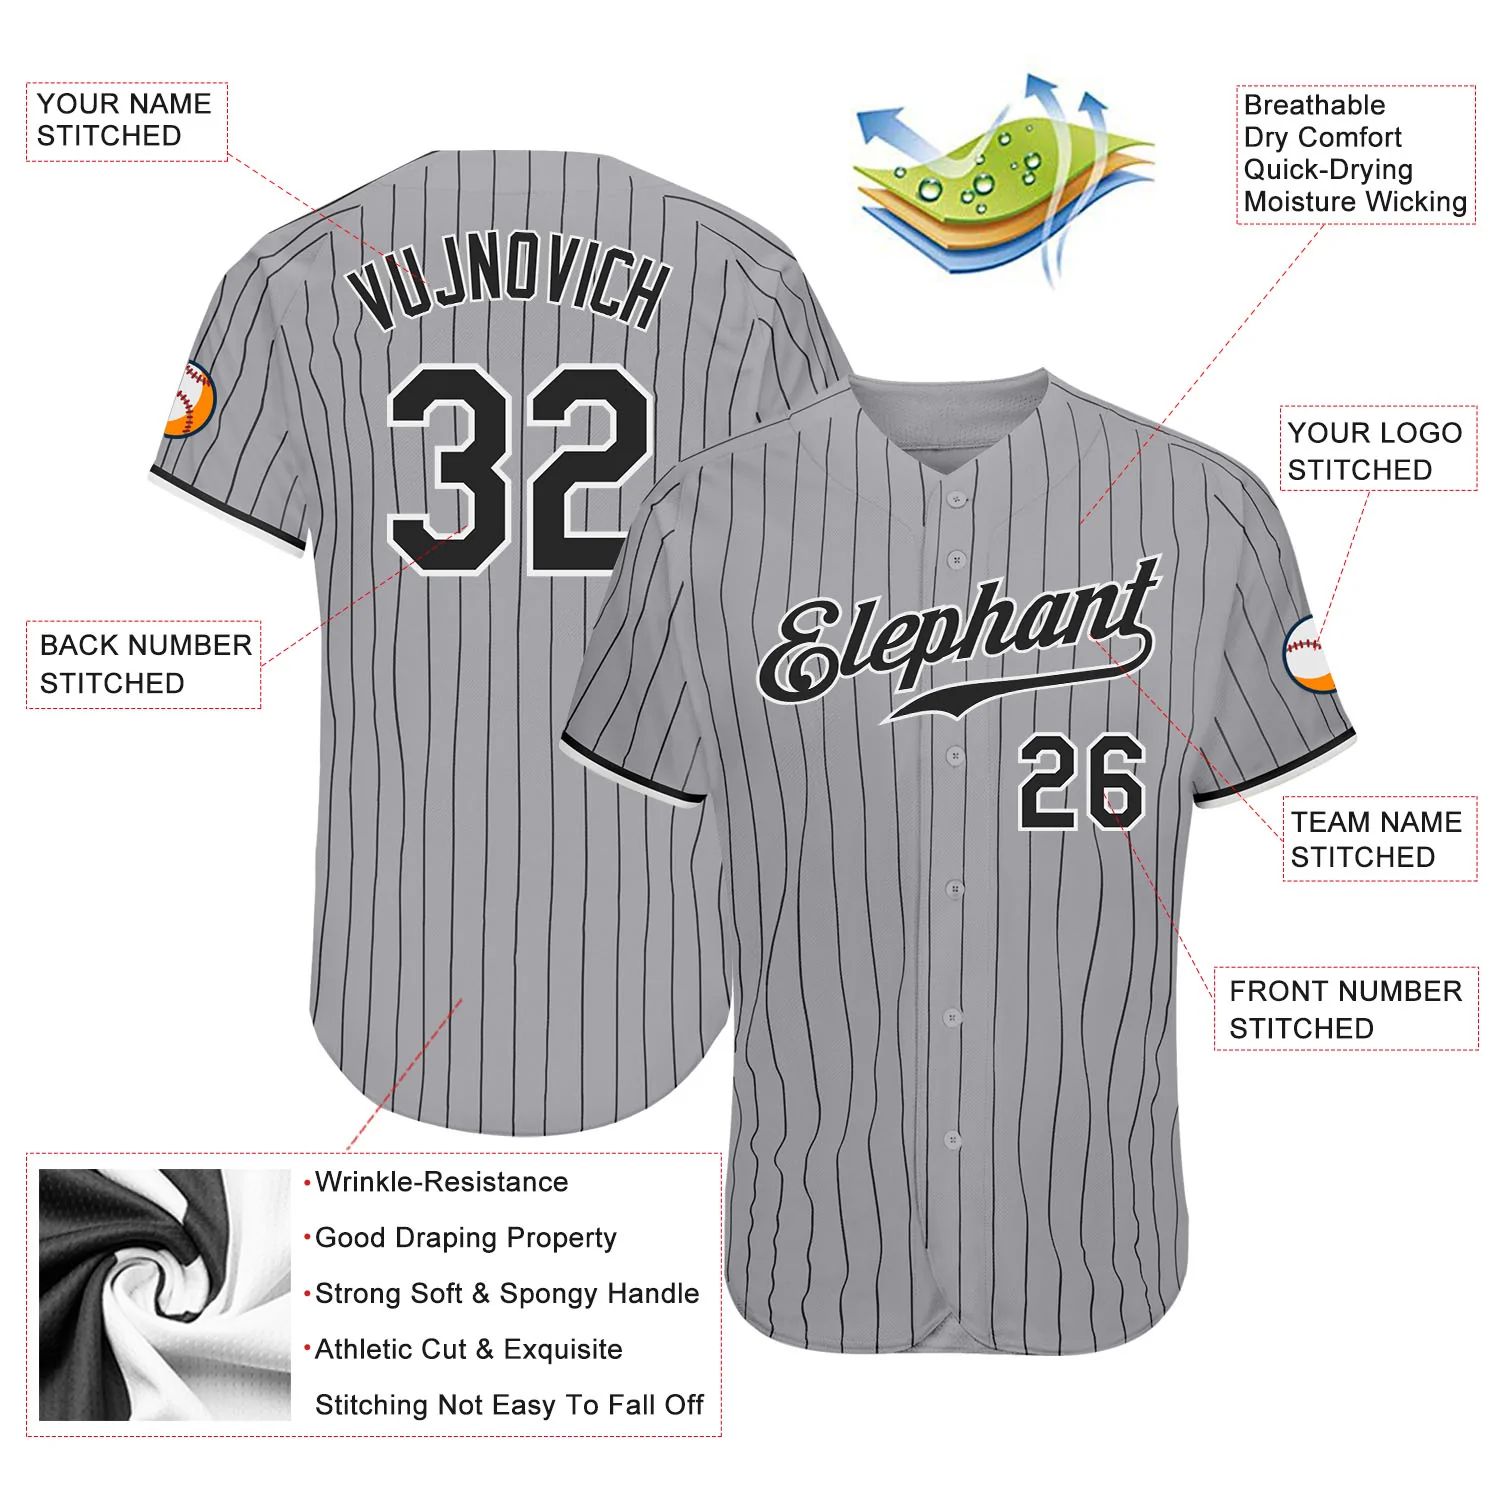 build-white-gray-baseball-black-jersey-authentic-gray0167-online-3.jpg